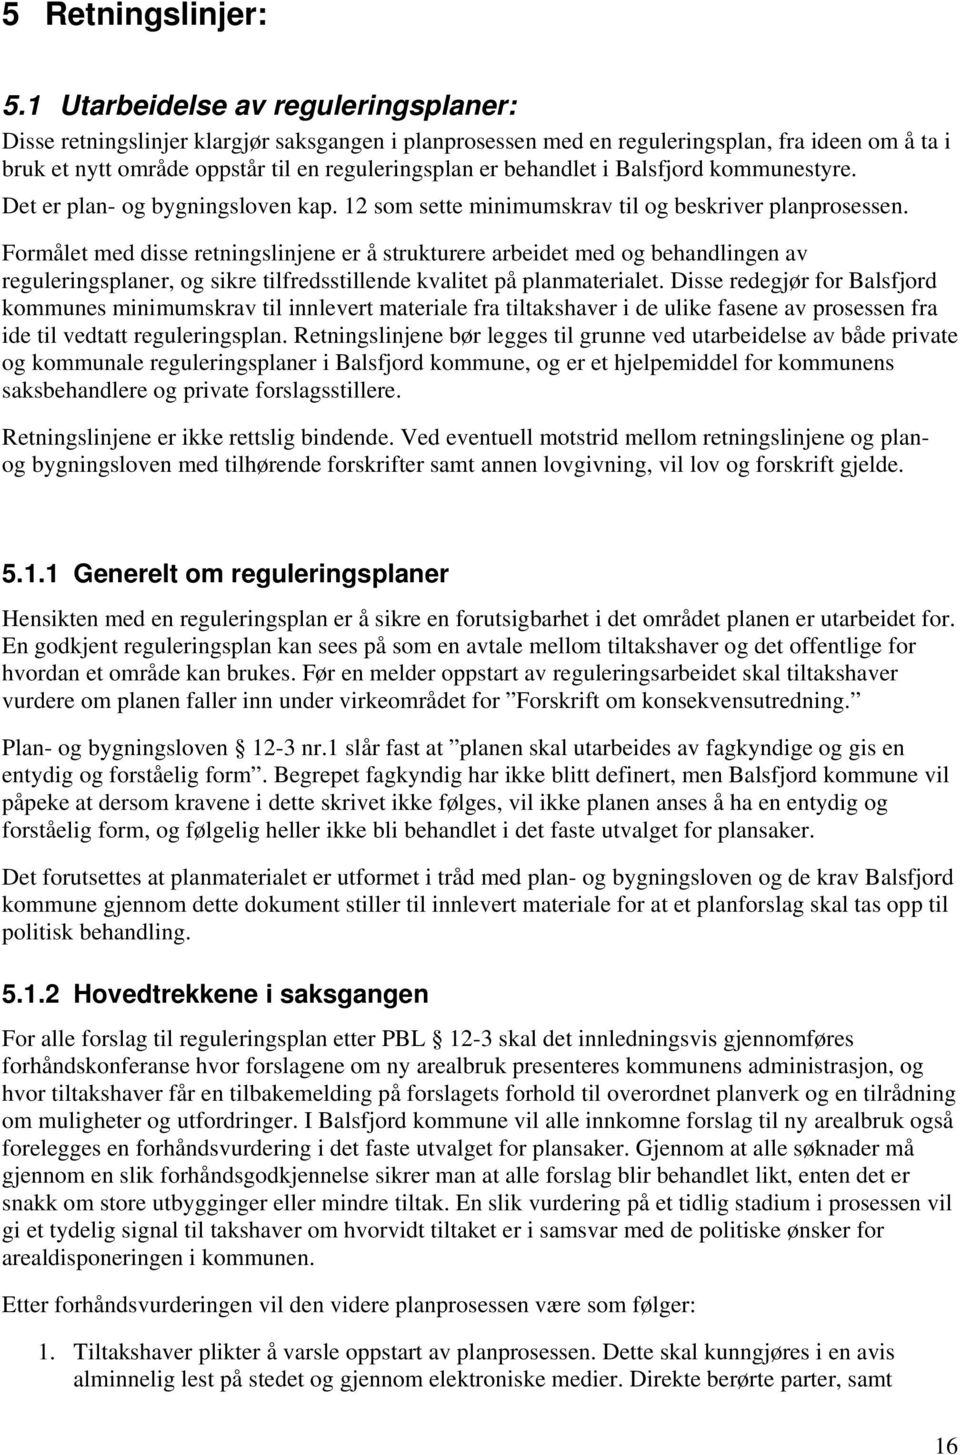 behandlet i Balsfjord kommunestyre. Det er plan- og bygningsloven kap. 12 som sette minimumskrav til og beskriver planprosessen.